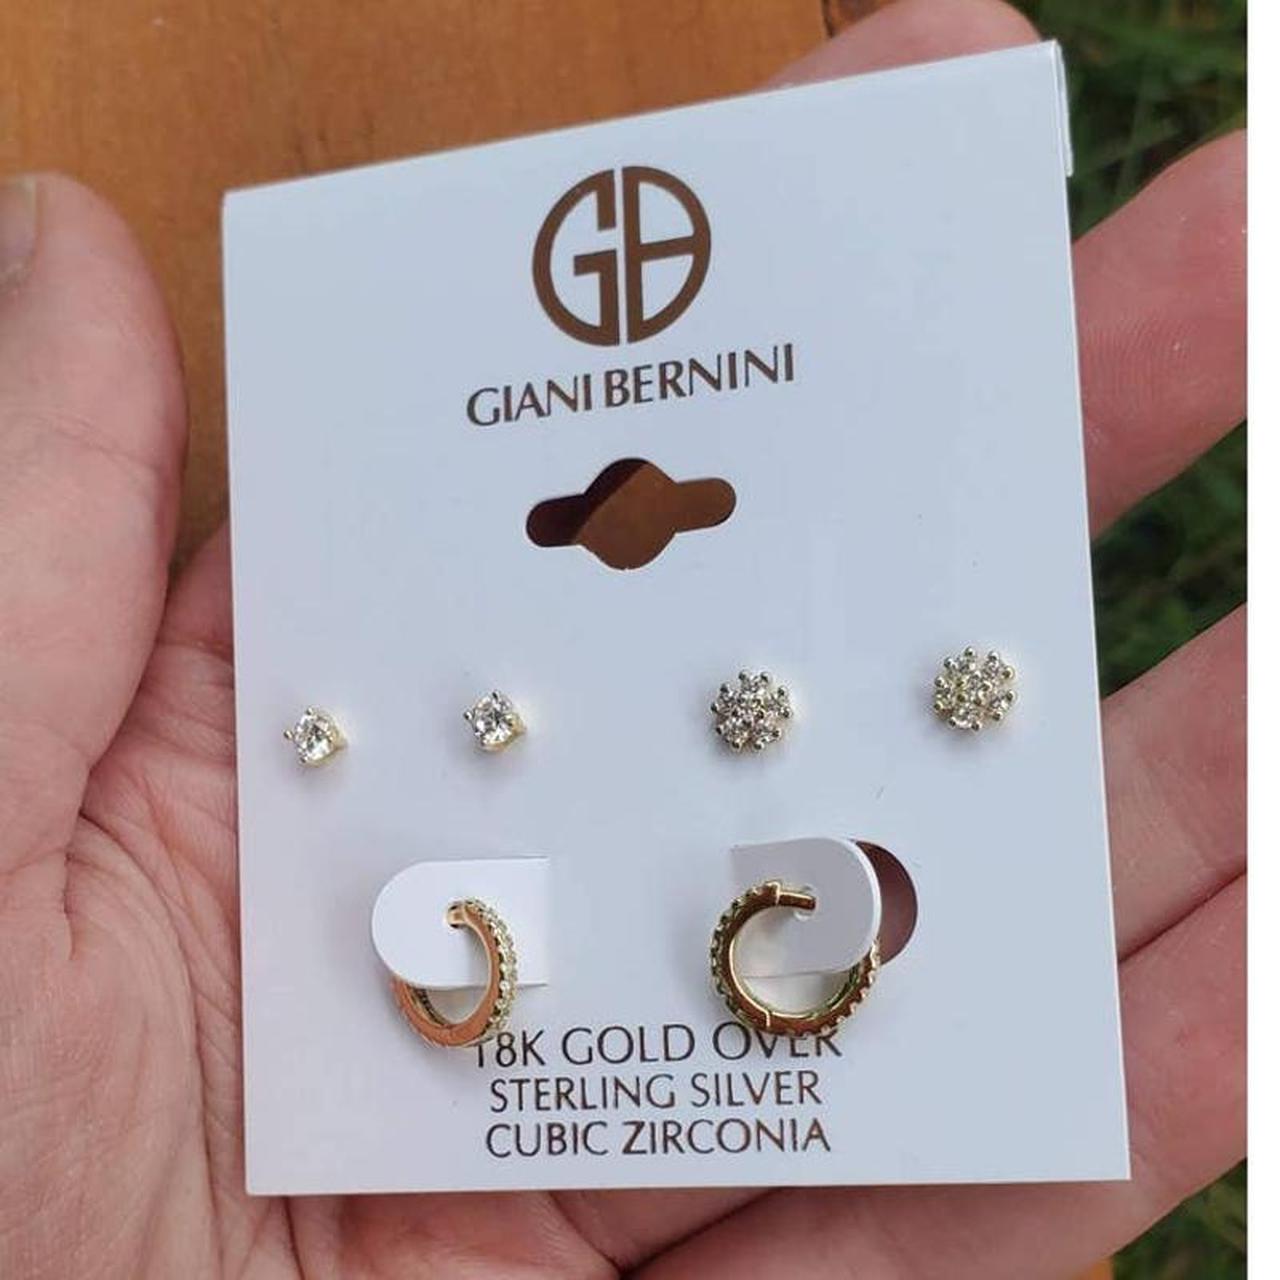 Giani Bernini cubic zirconia 18k gold over sterling silver